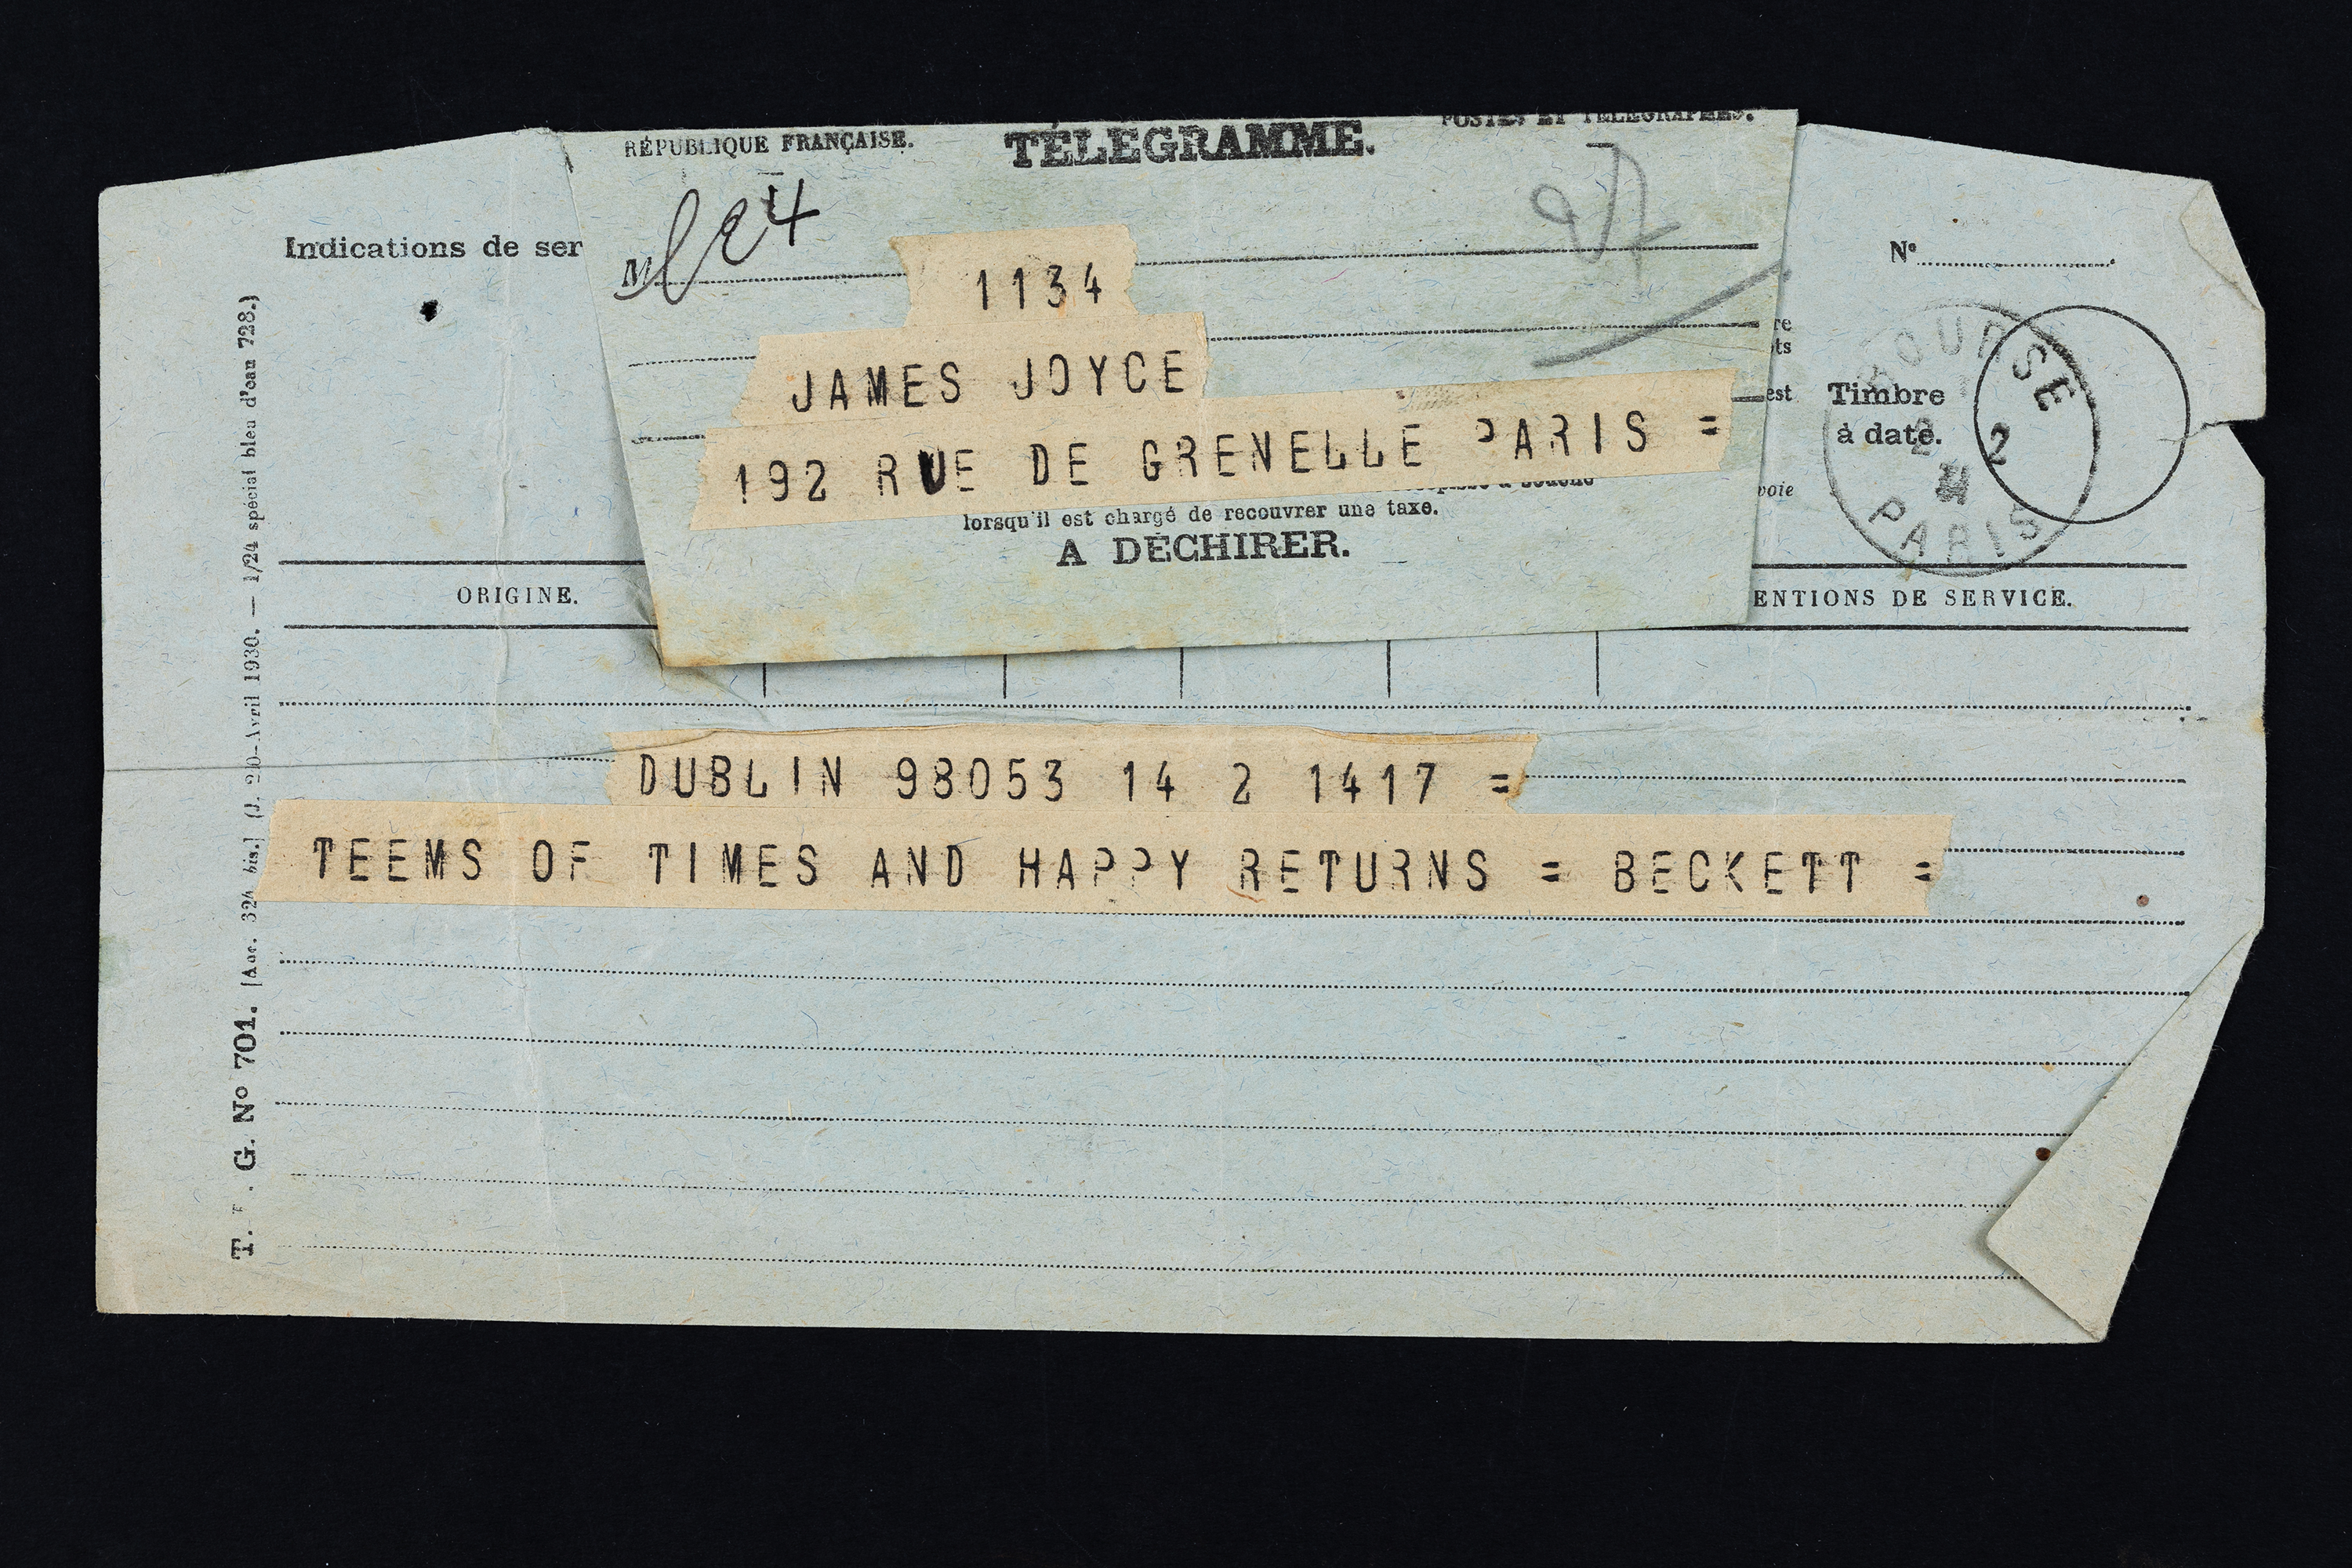 Birthday greetings telegram from Samuel Beckett to James Joyce, 2 February 1931 (The Beckett Estate/ University of Reading)